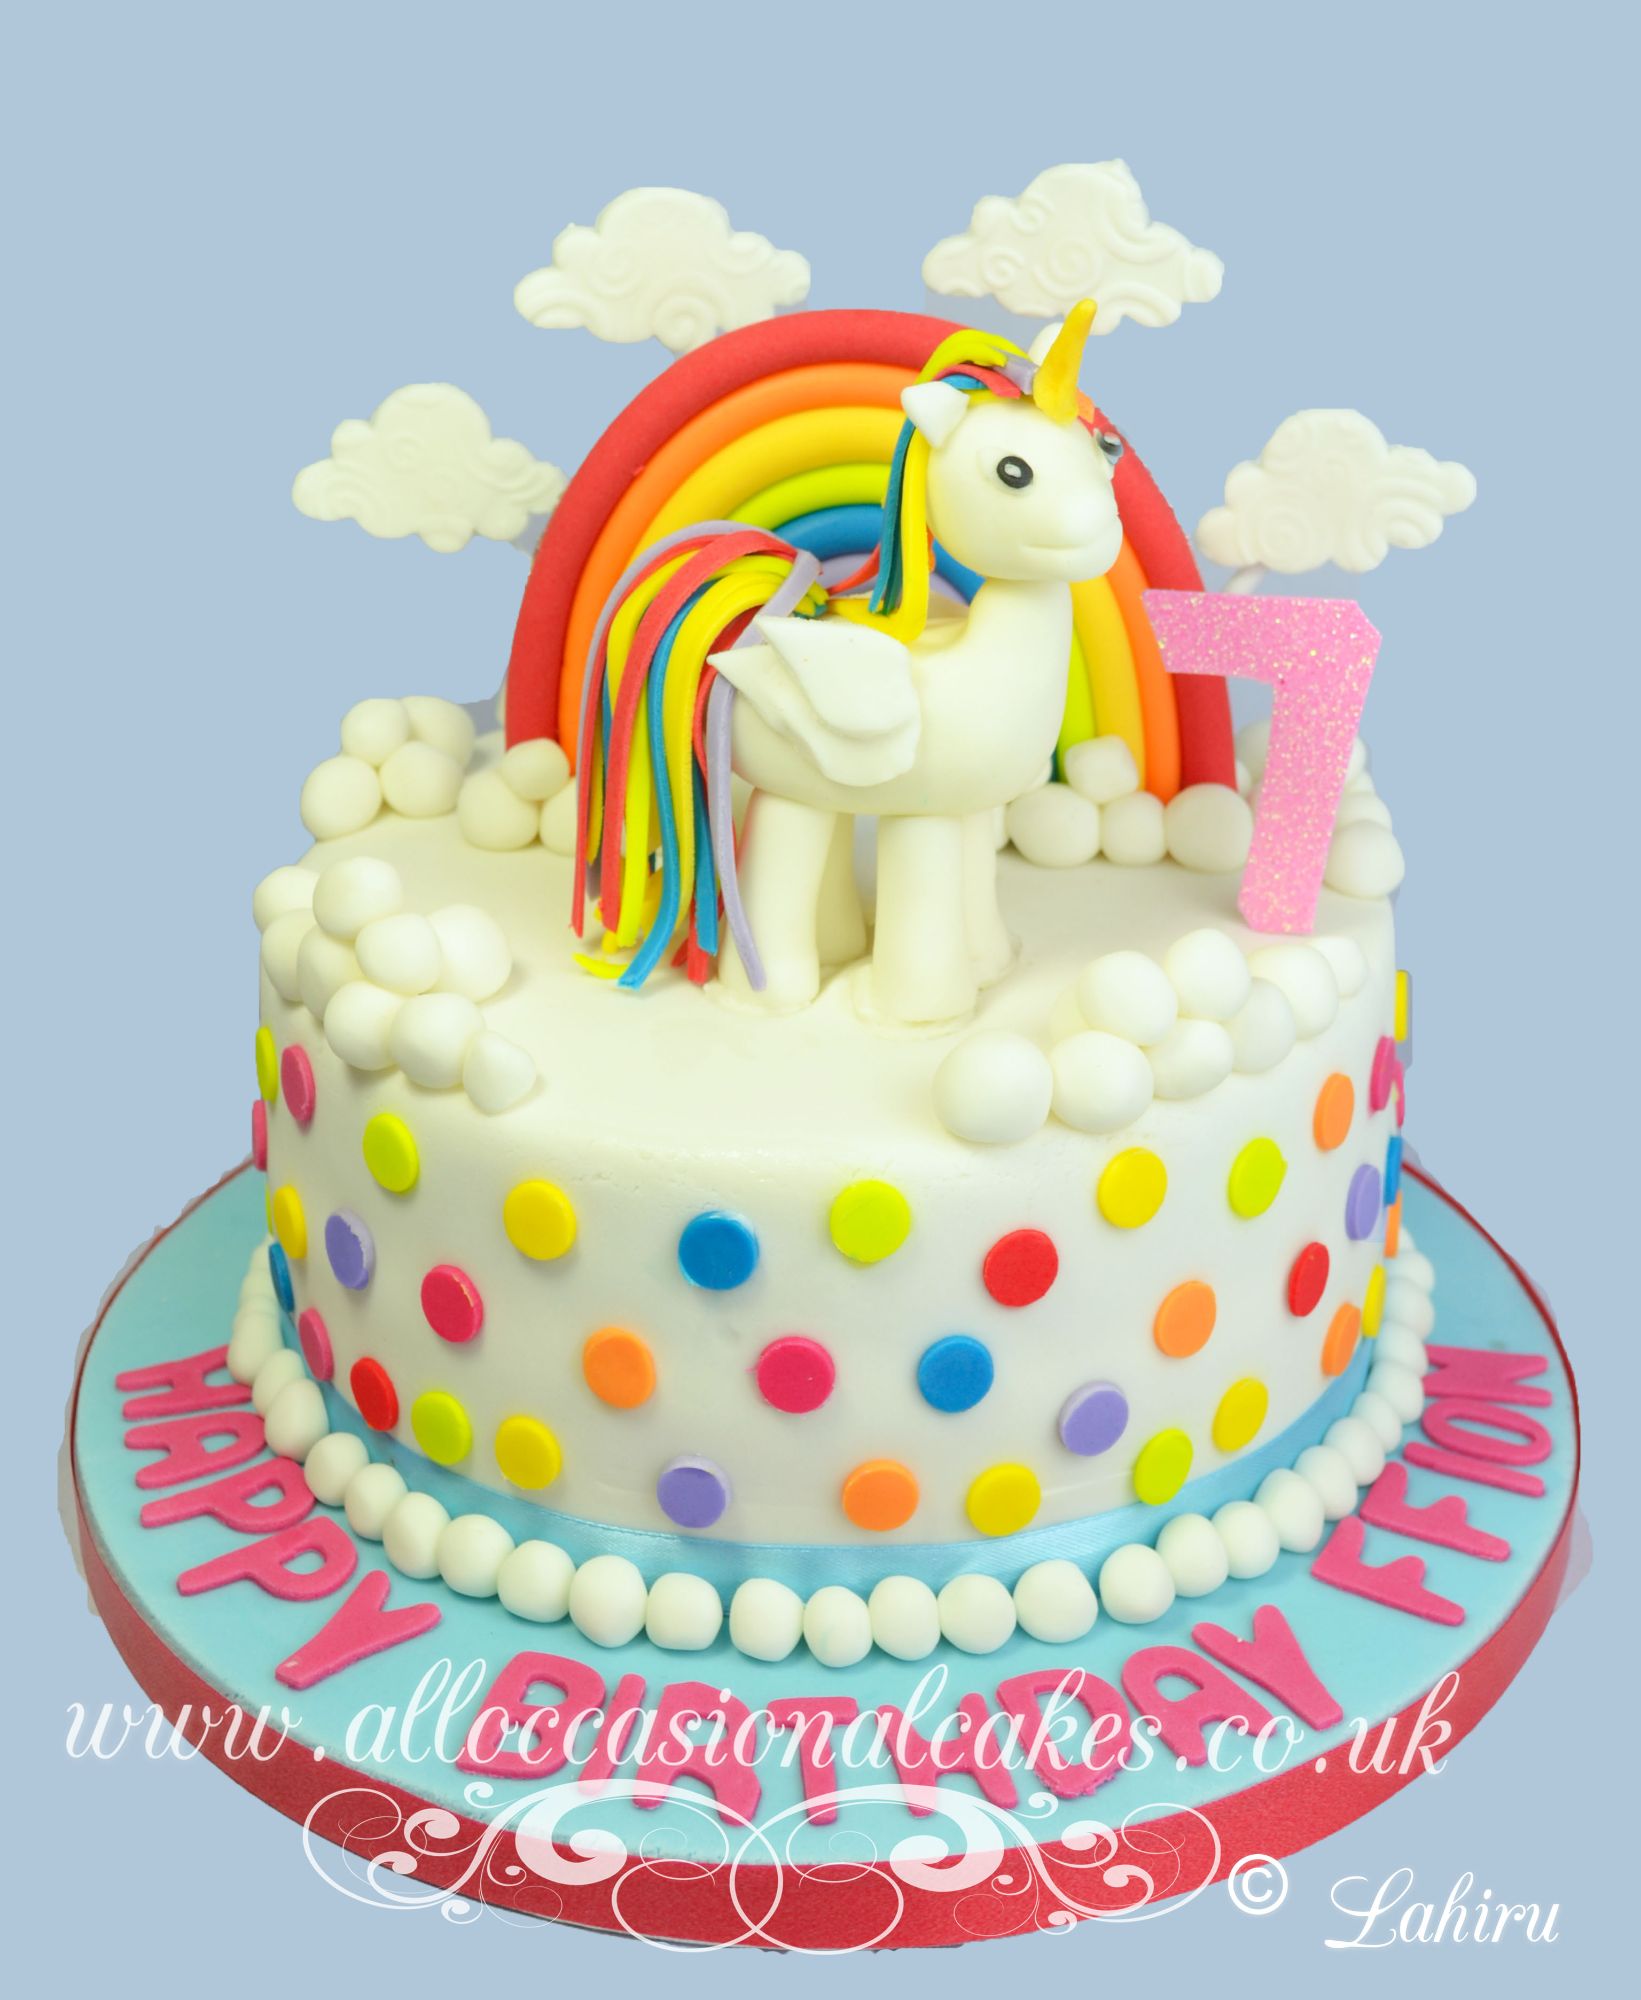  unicorn themed birthday cake